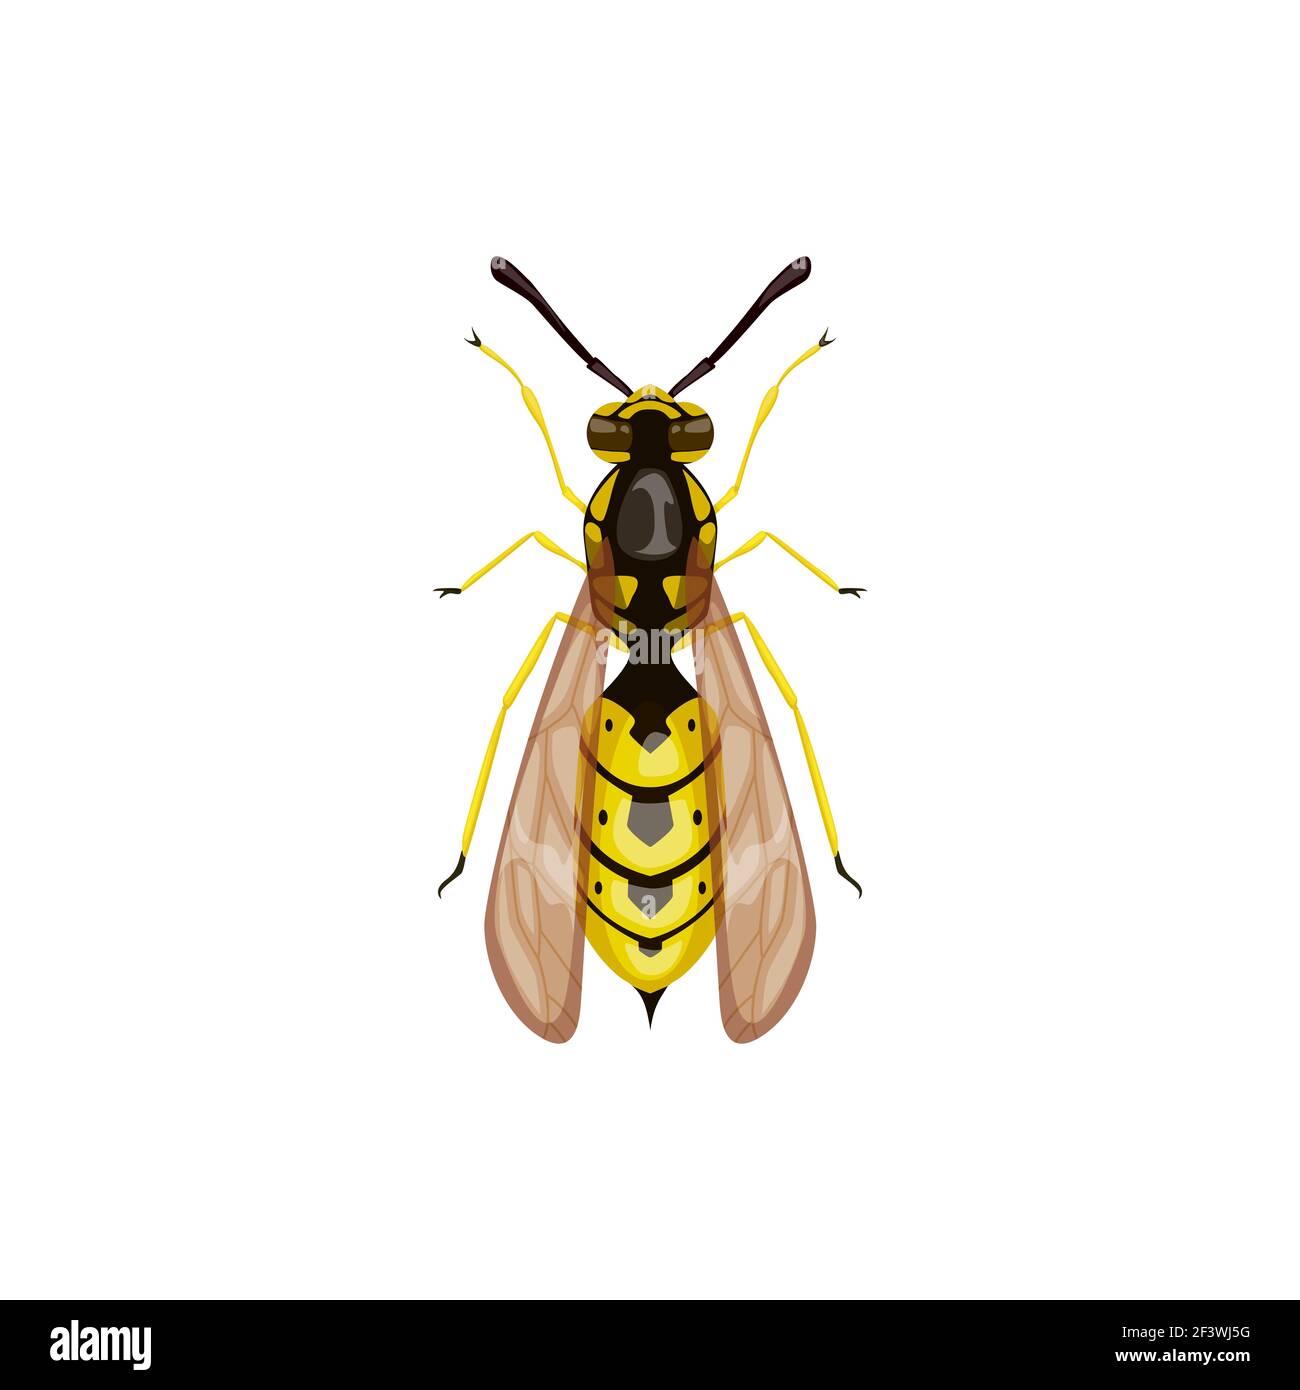 Wespensymbol, Schädlingsbekämpfung Insektenparasit, Hornet Vektor isoliert. Schädlingsbekämpfung Desinsektion, Desinfektion und Ausrottung Symbol, Landwirtschaft Insekten Stock Vektor